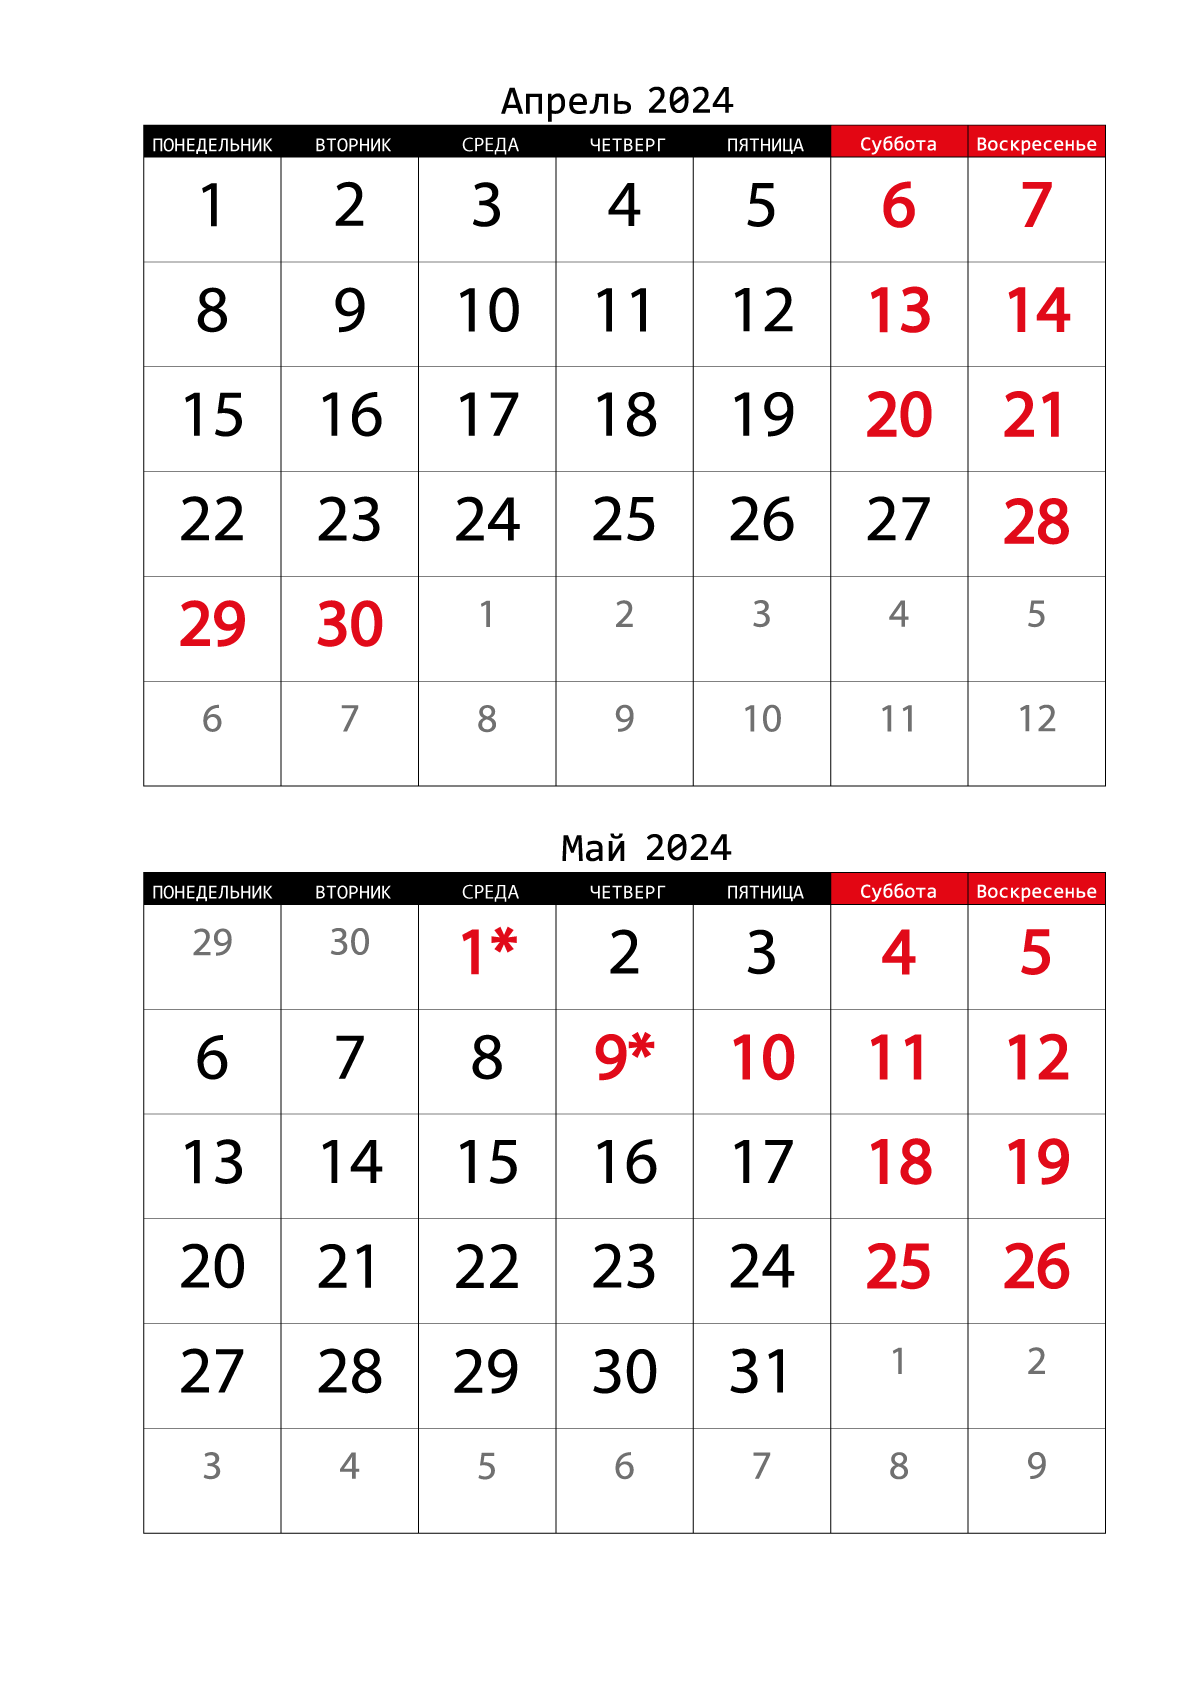 Апрель - Май 2024 календарь на 2 месяца